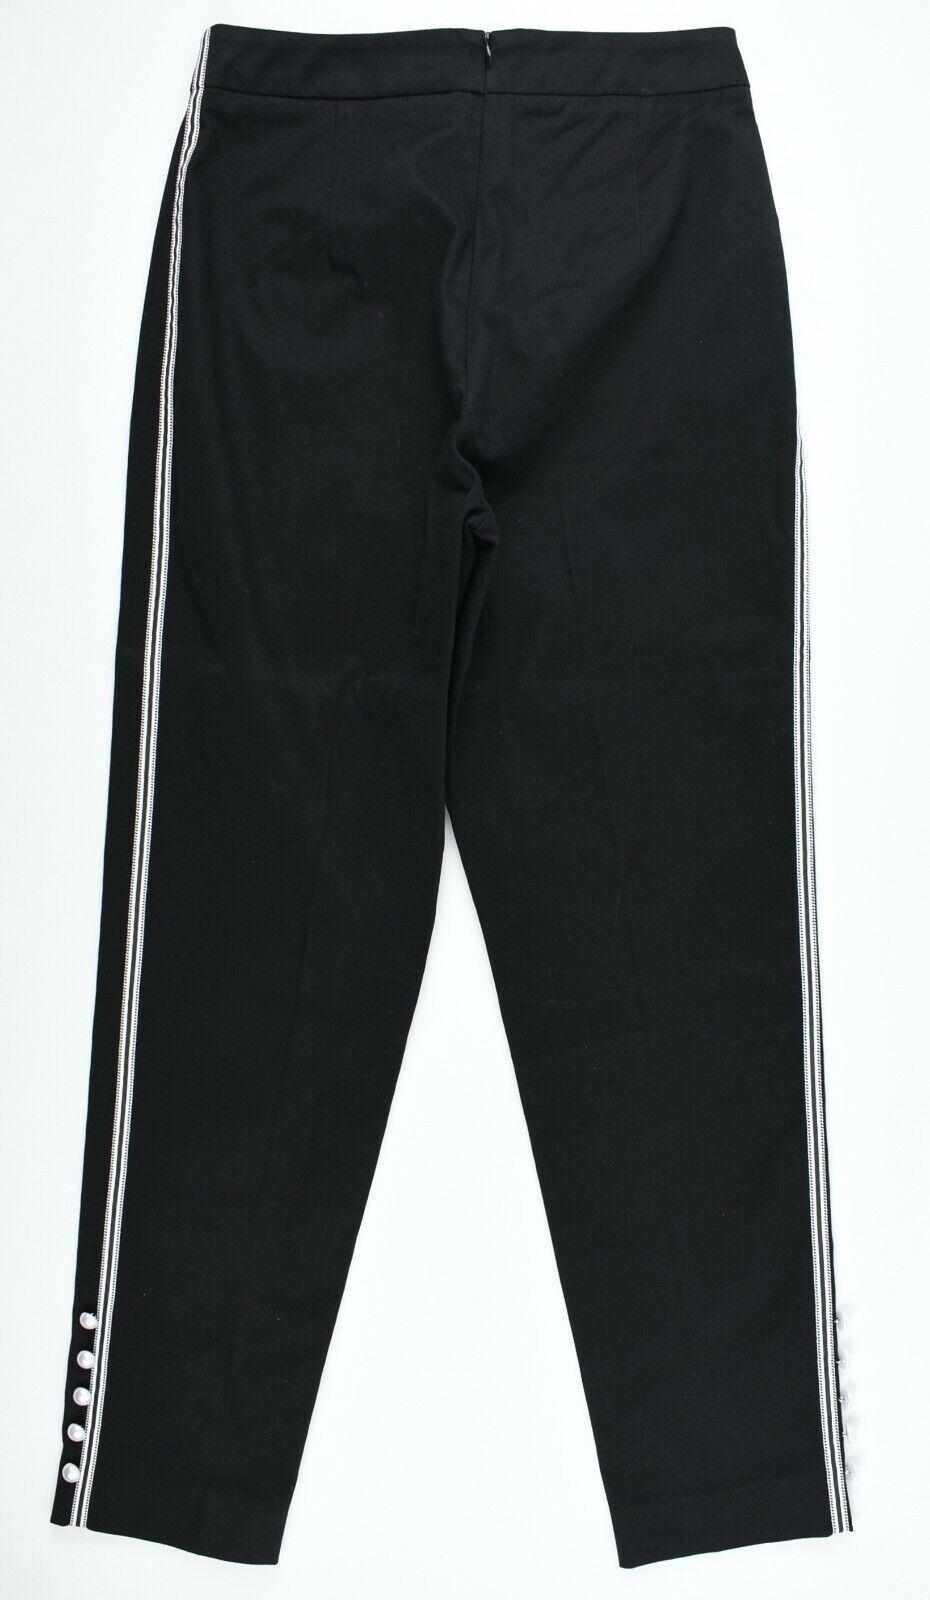 LULU GUINESS Women's TONI Trousers Pants, Black, size UK 8